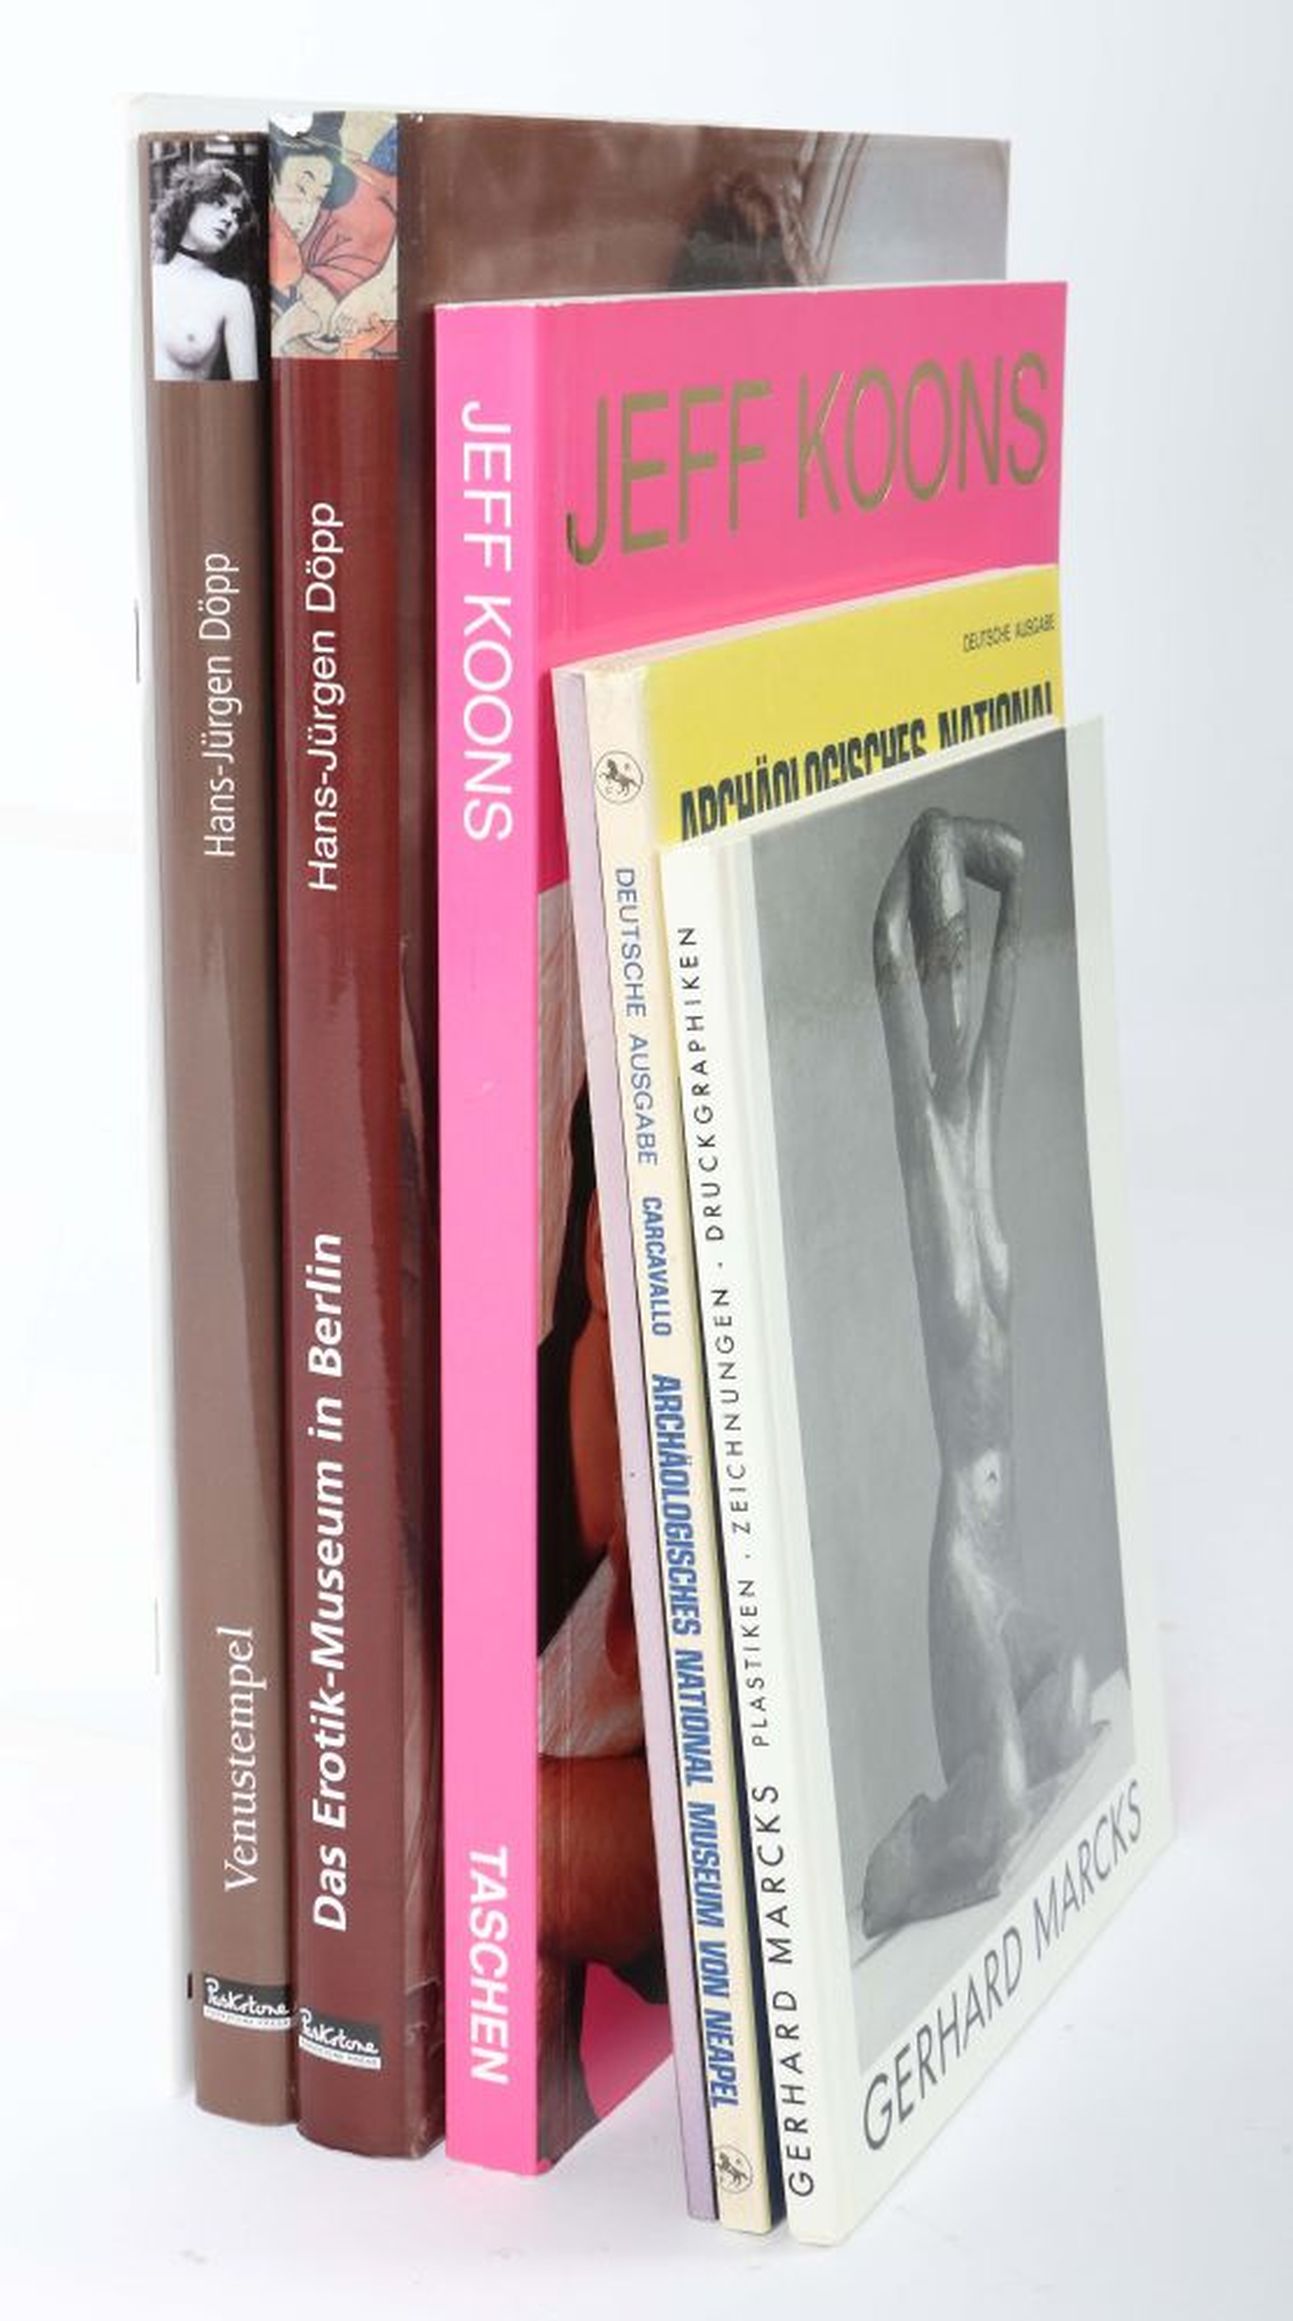 7 Kunstbücher Muthesius, Jeff Koons, - Image 2 of 2